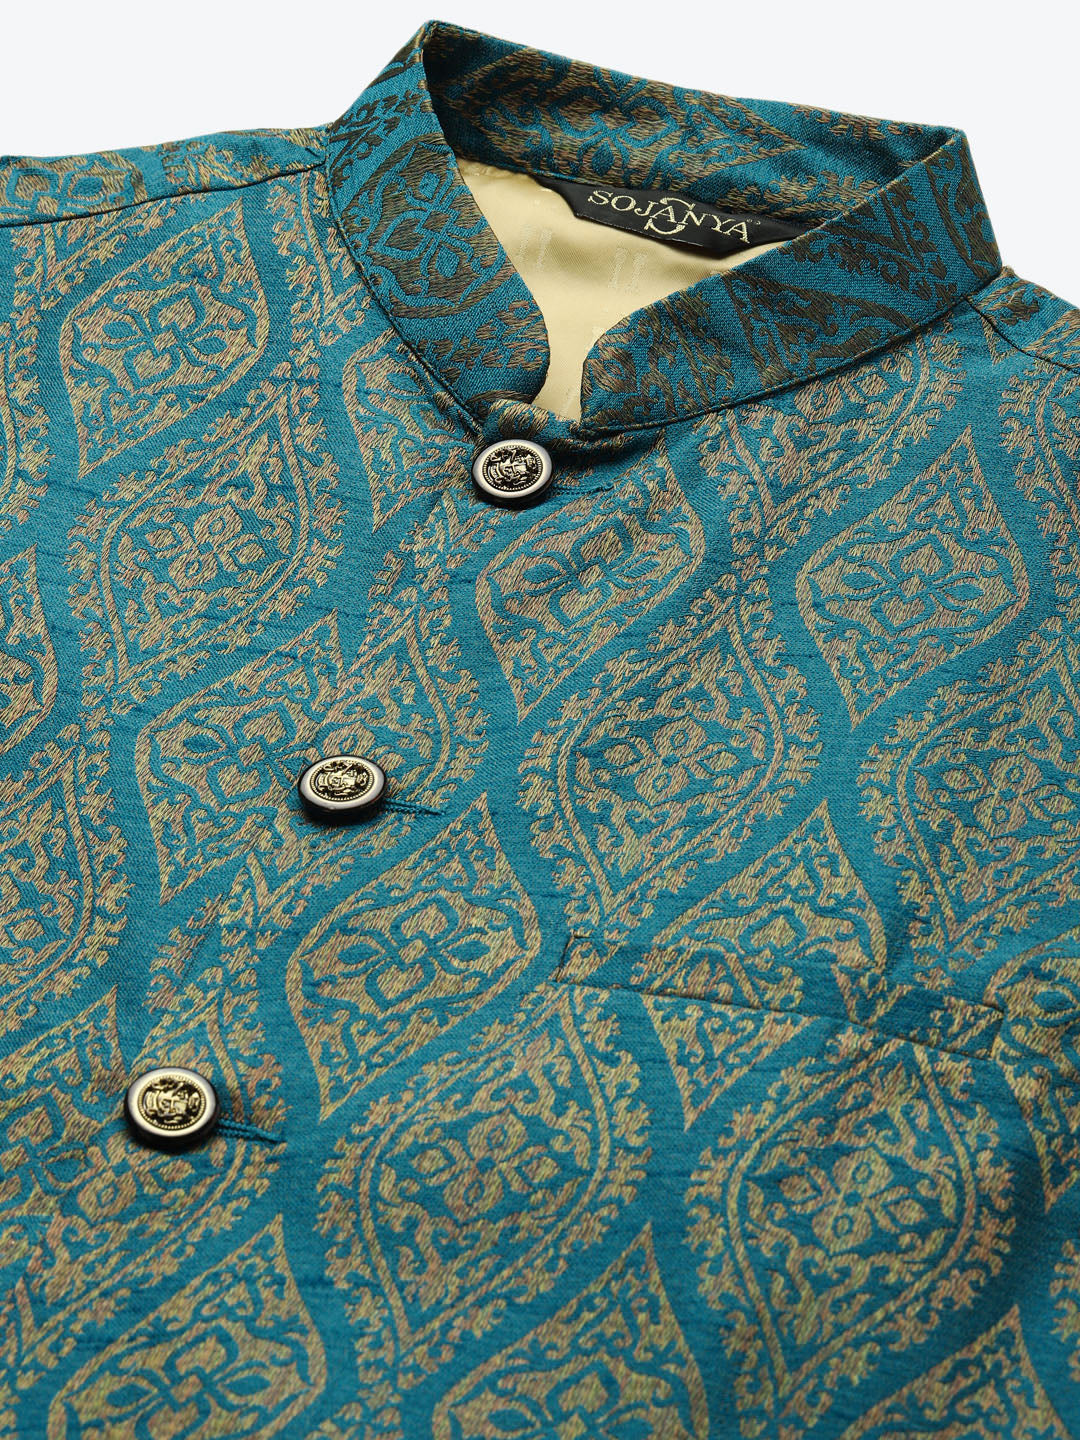 Men's Jacquard Silk Teal Blue & Gold Waistcoat